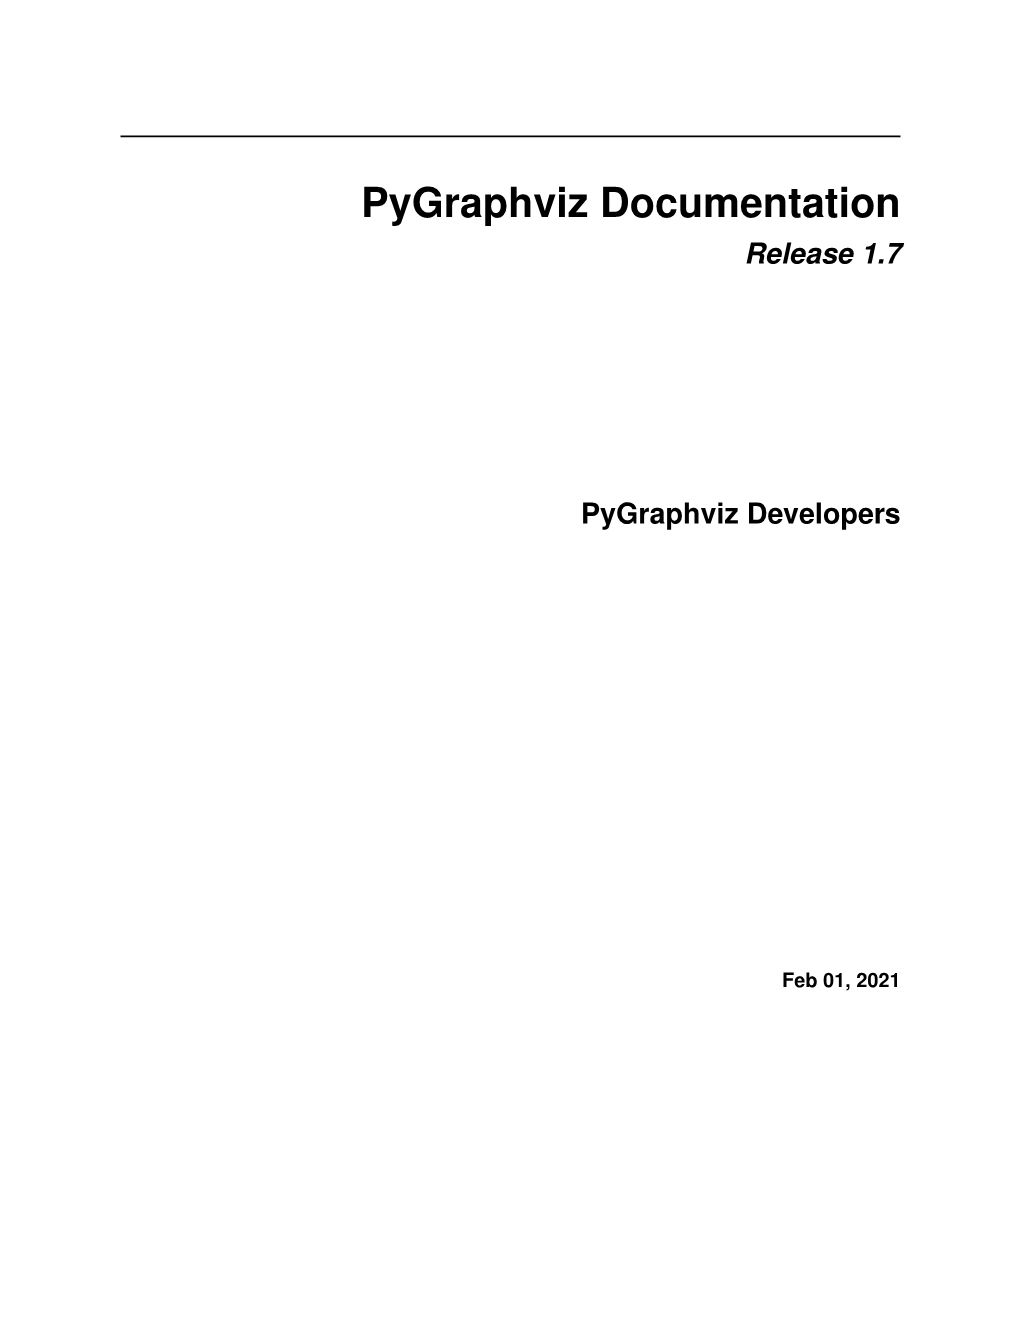 Pygraphviz Documentation Release 1.7